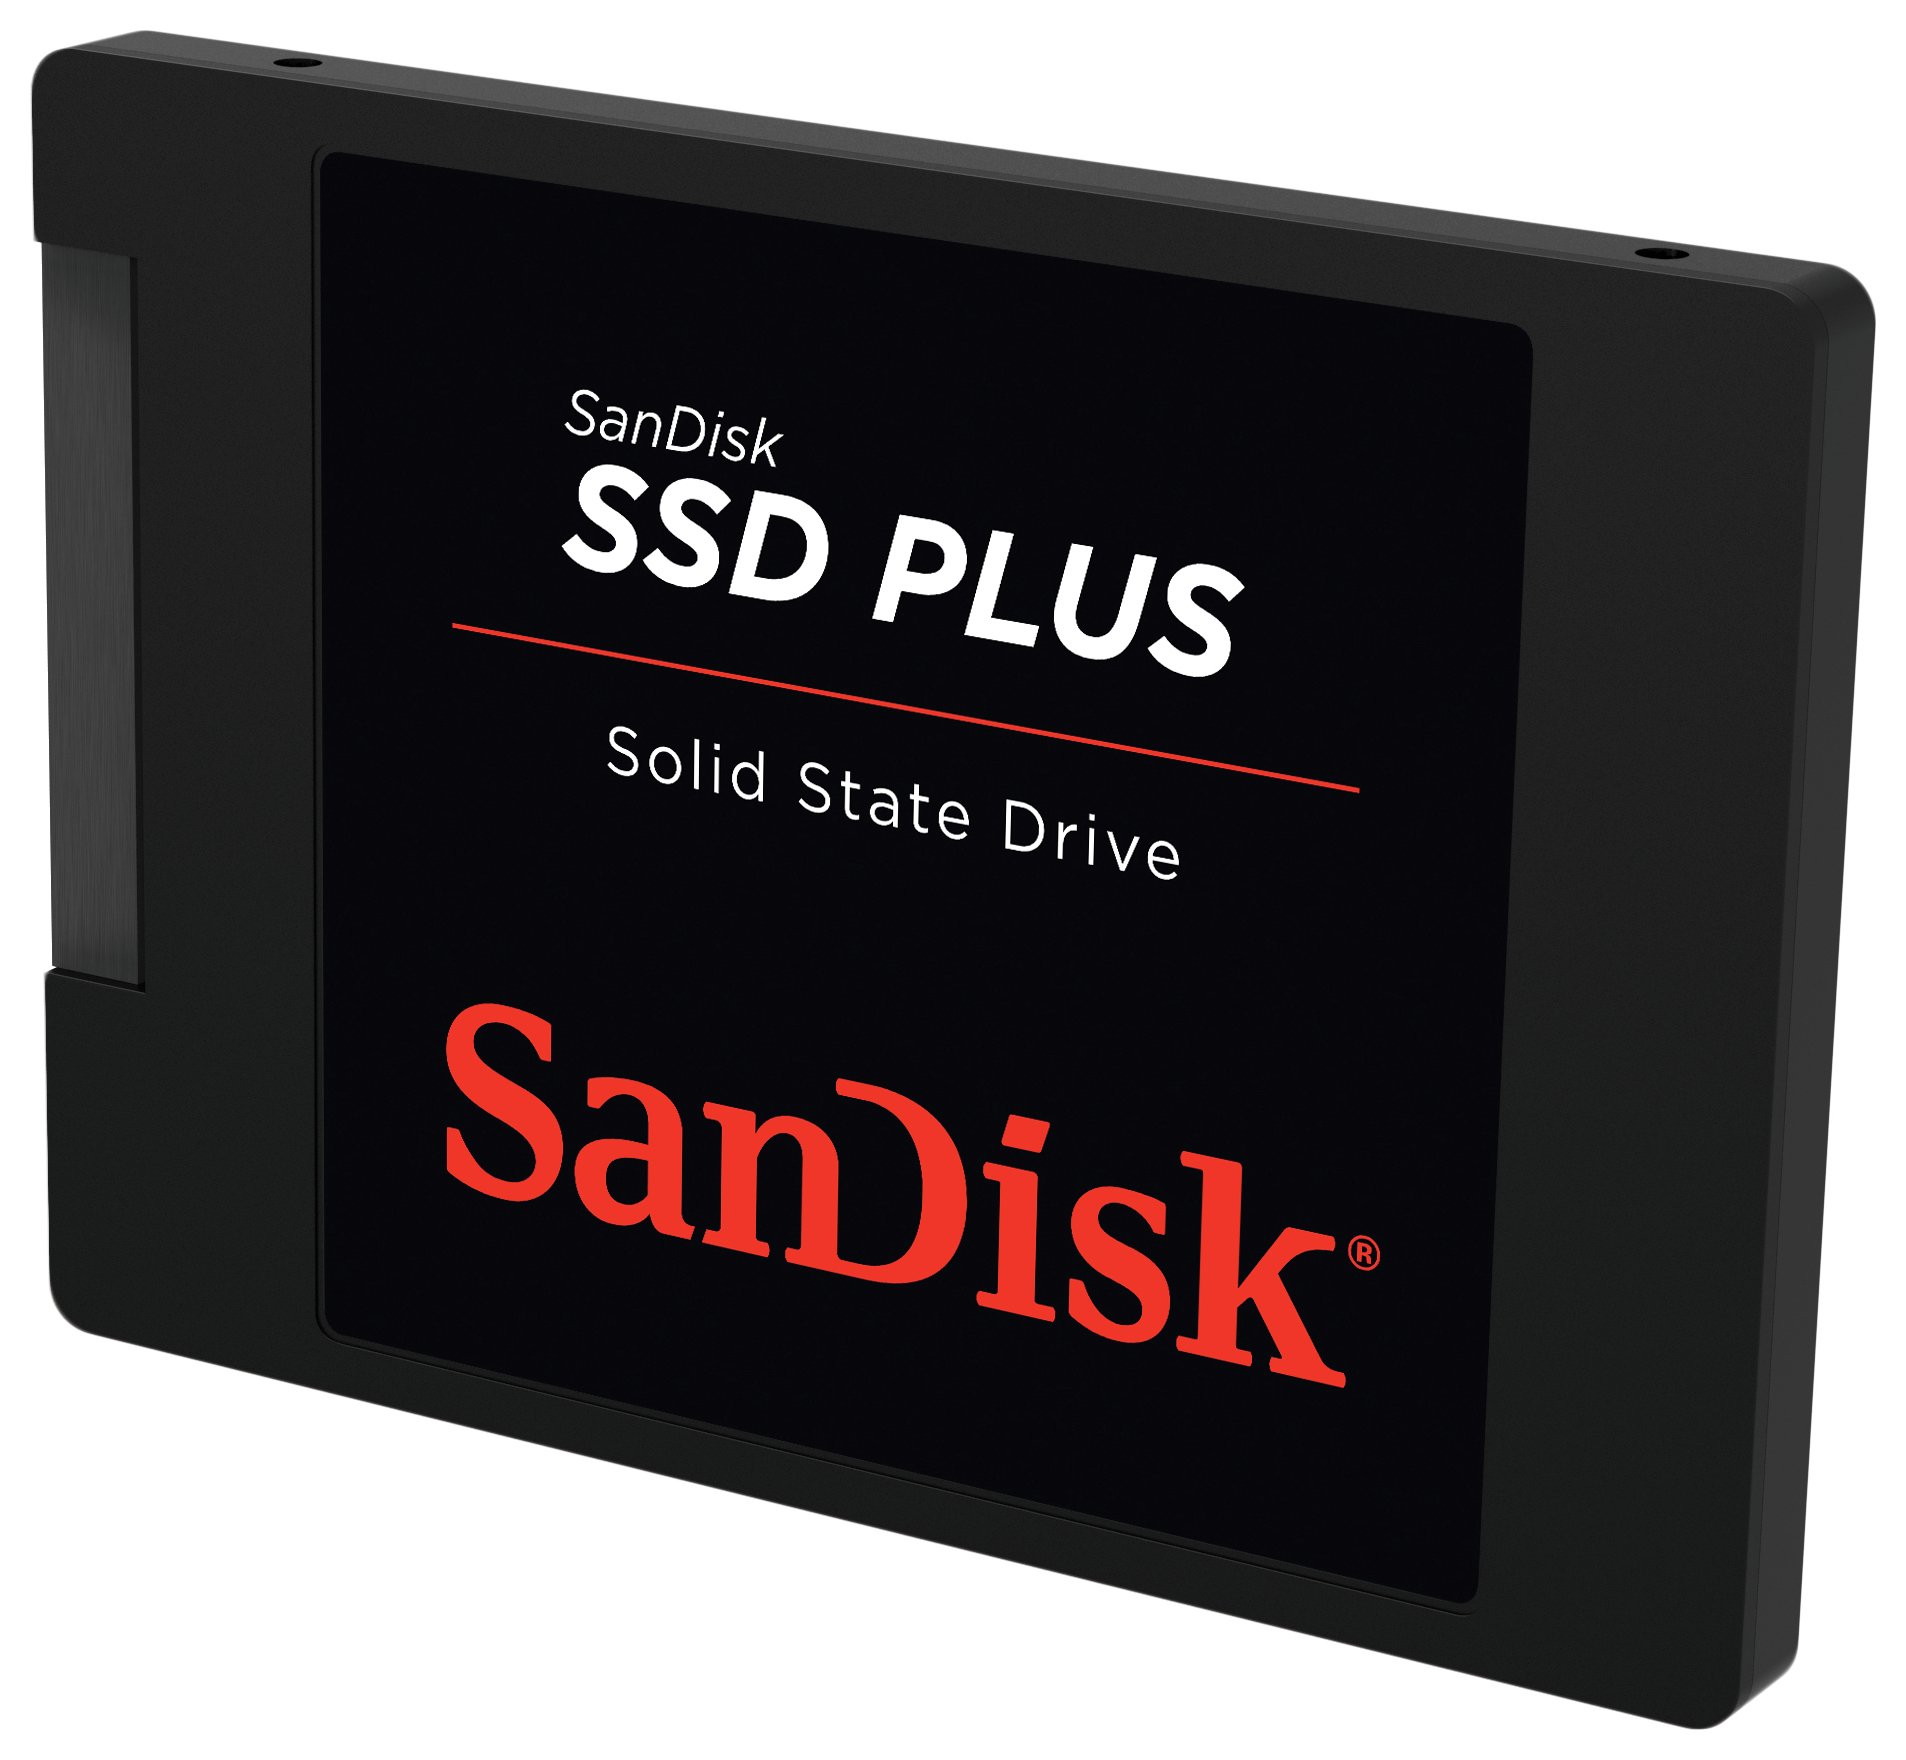 SanDisk SSD Plus 240GB Memory Card. Review